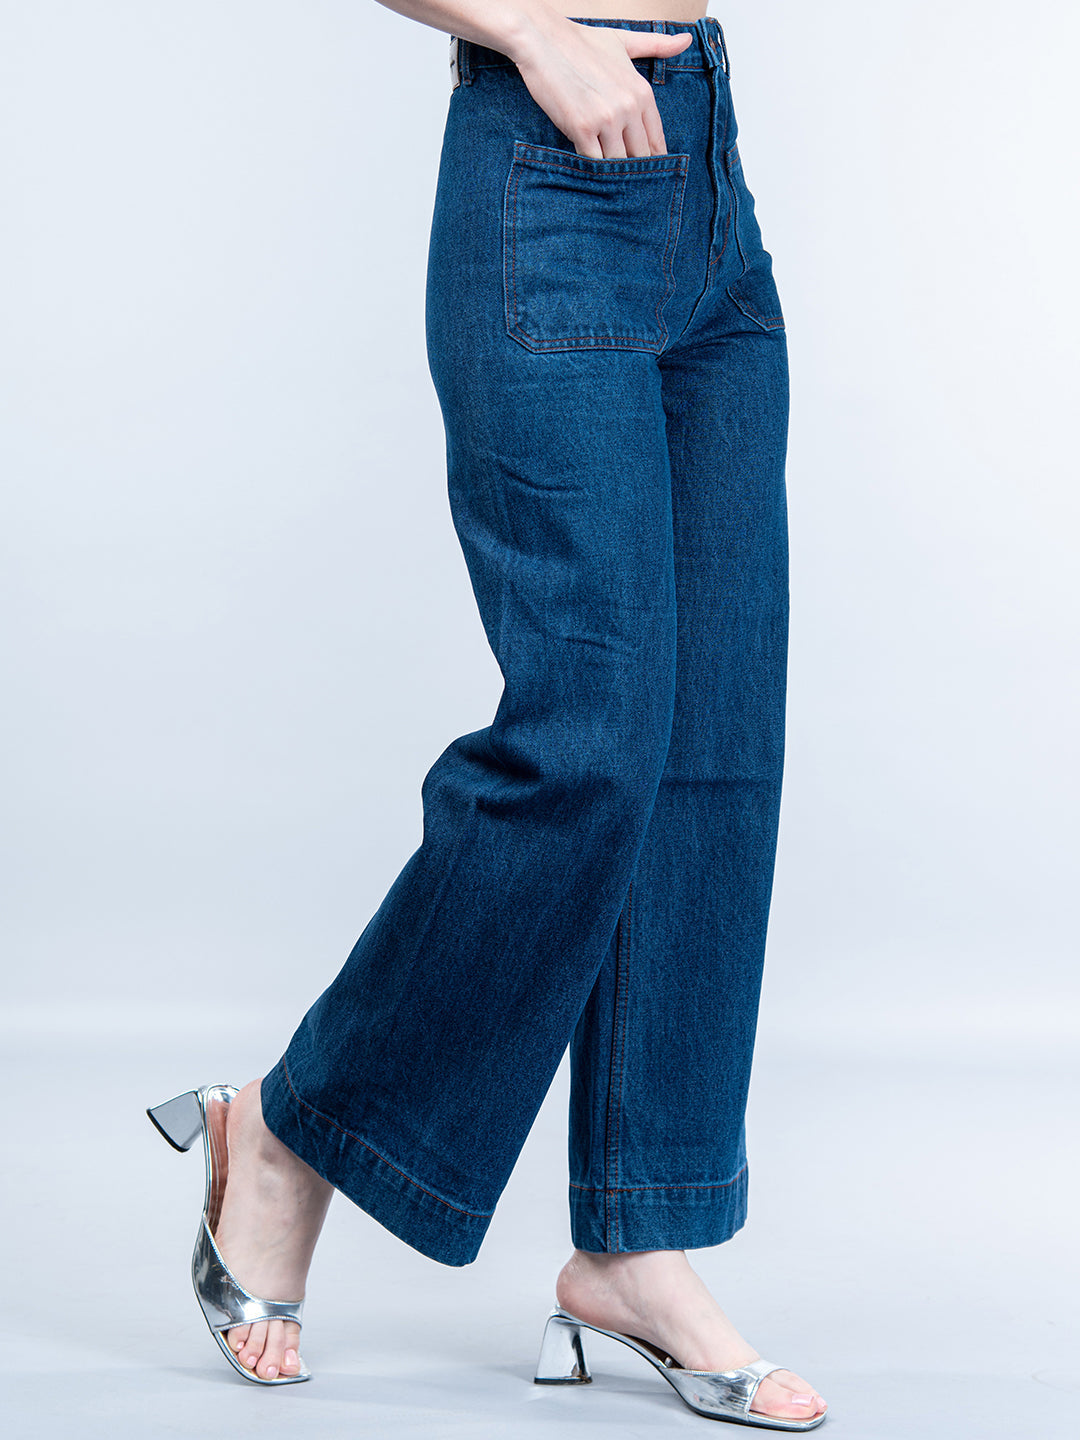 Buy Digital Dress Room Denim Jeans for Women Slim Fit 'M Size' Mid Waist  Length Light Blue Sequined Jeans Pant for Girls Jegging Jogger at Amazon.in